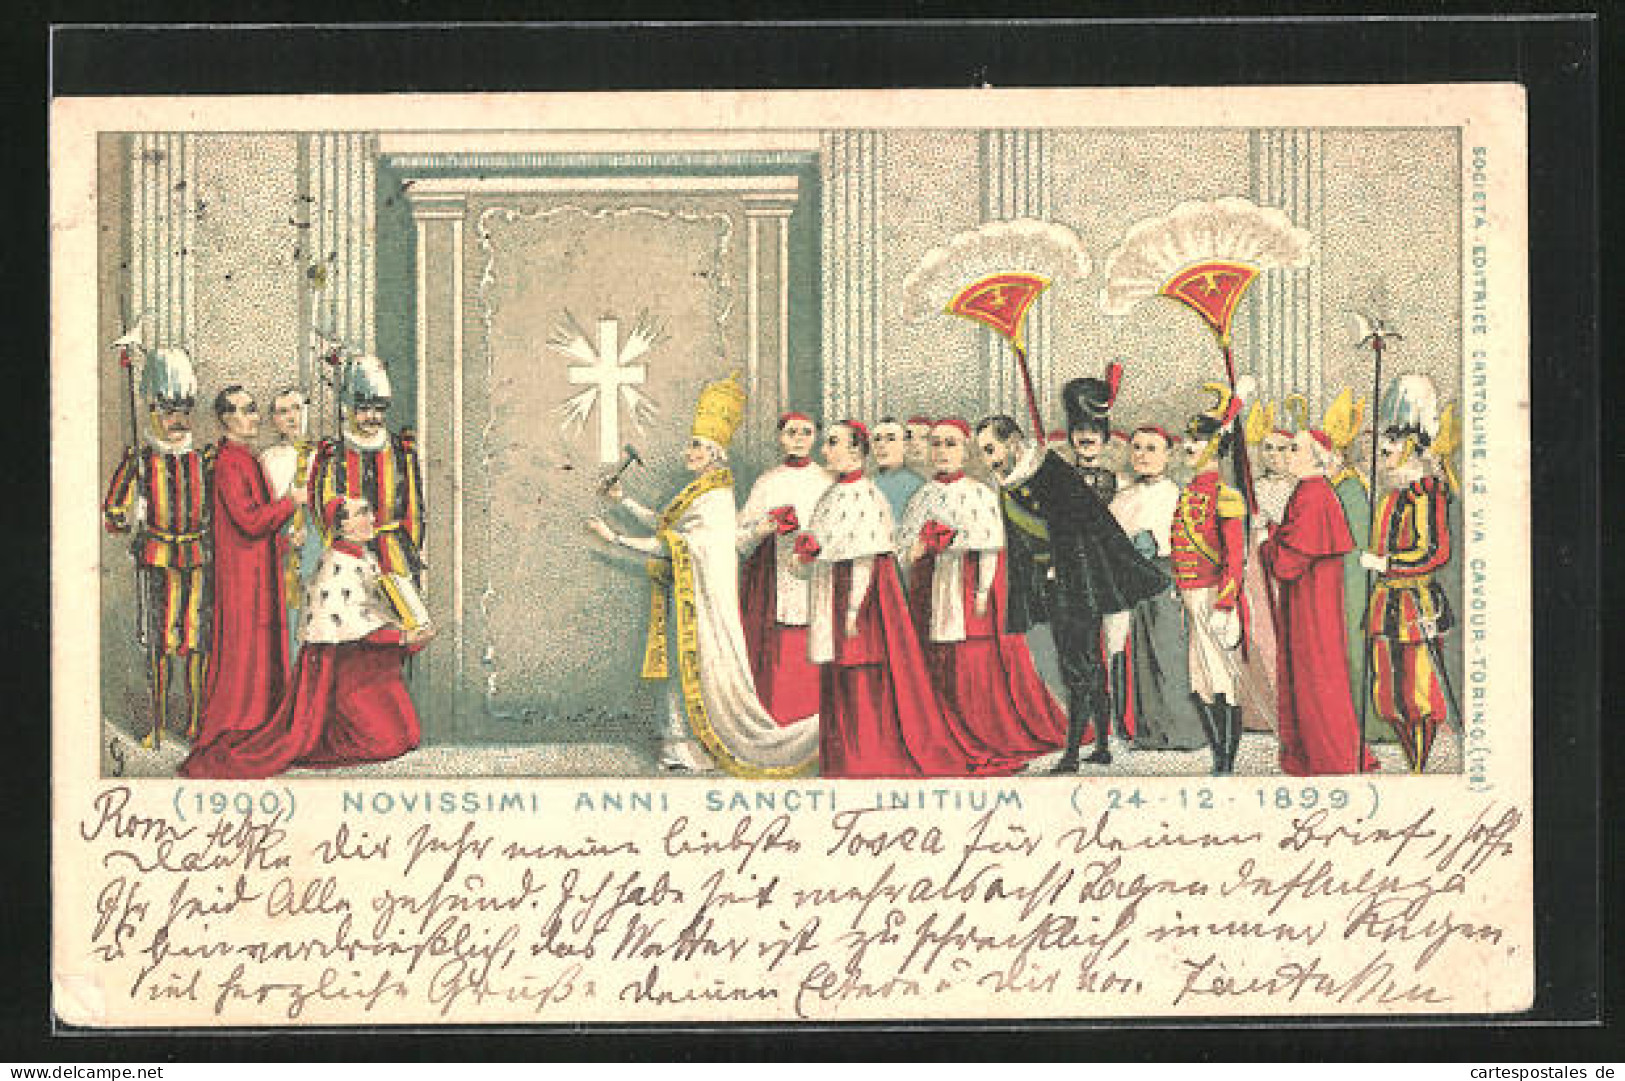 Lithographie Novissimi Anni Sancti Initium 24.12.1899, Papst Leo XIII.  - Papes